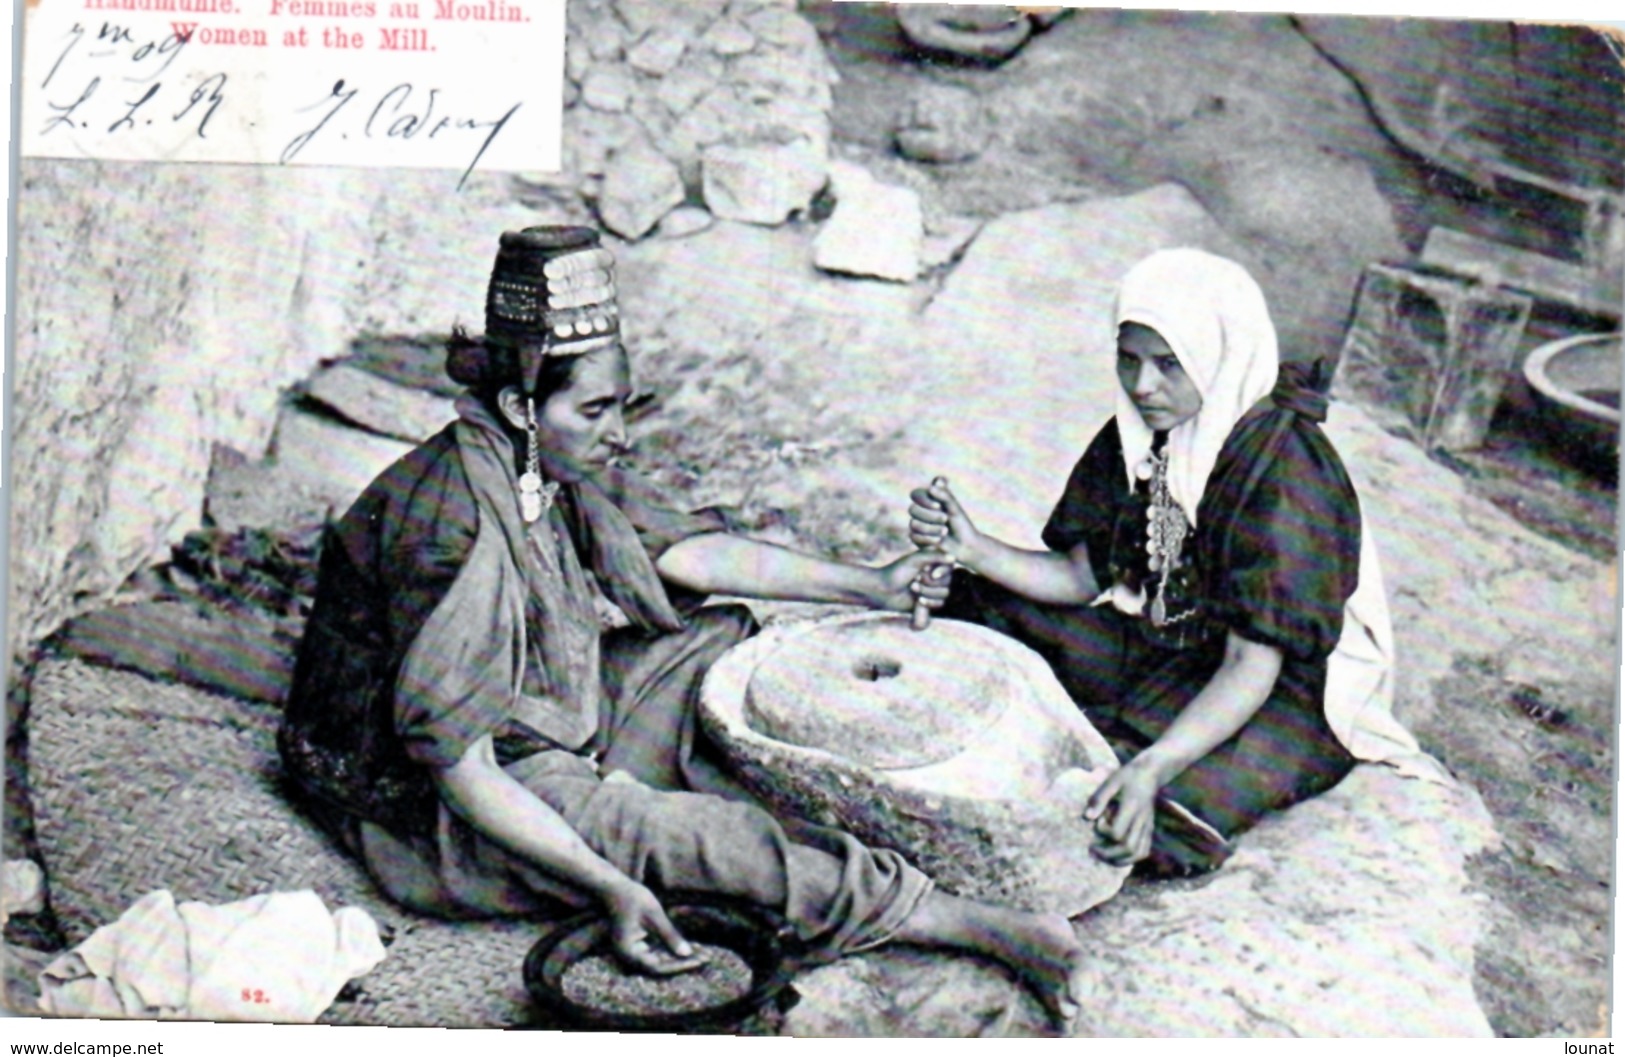 PALESTINE - Handmühle. Femmes Au Moulin - Women At The Mill - Palestine